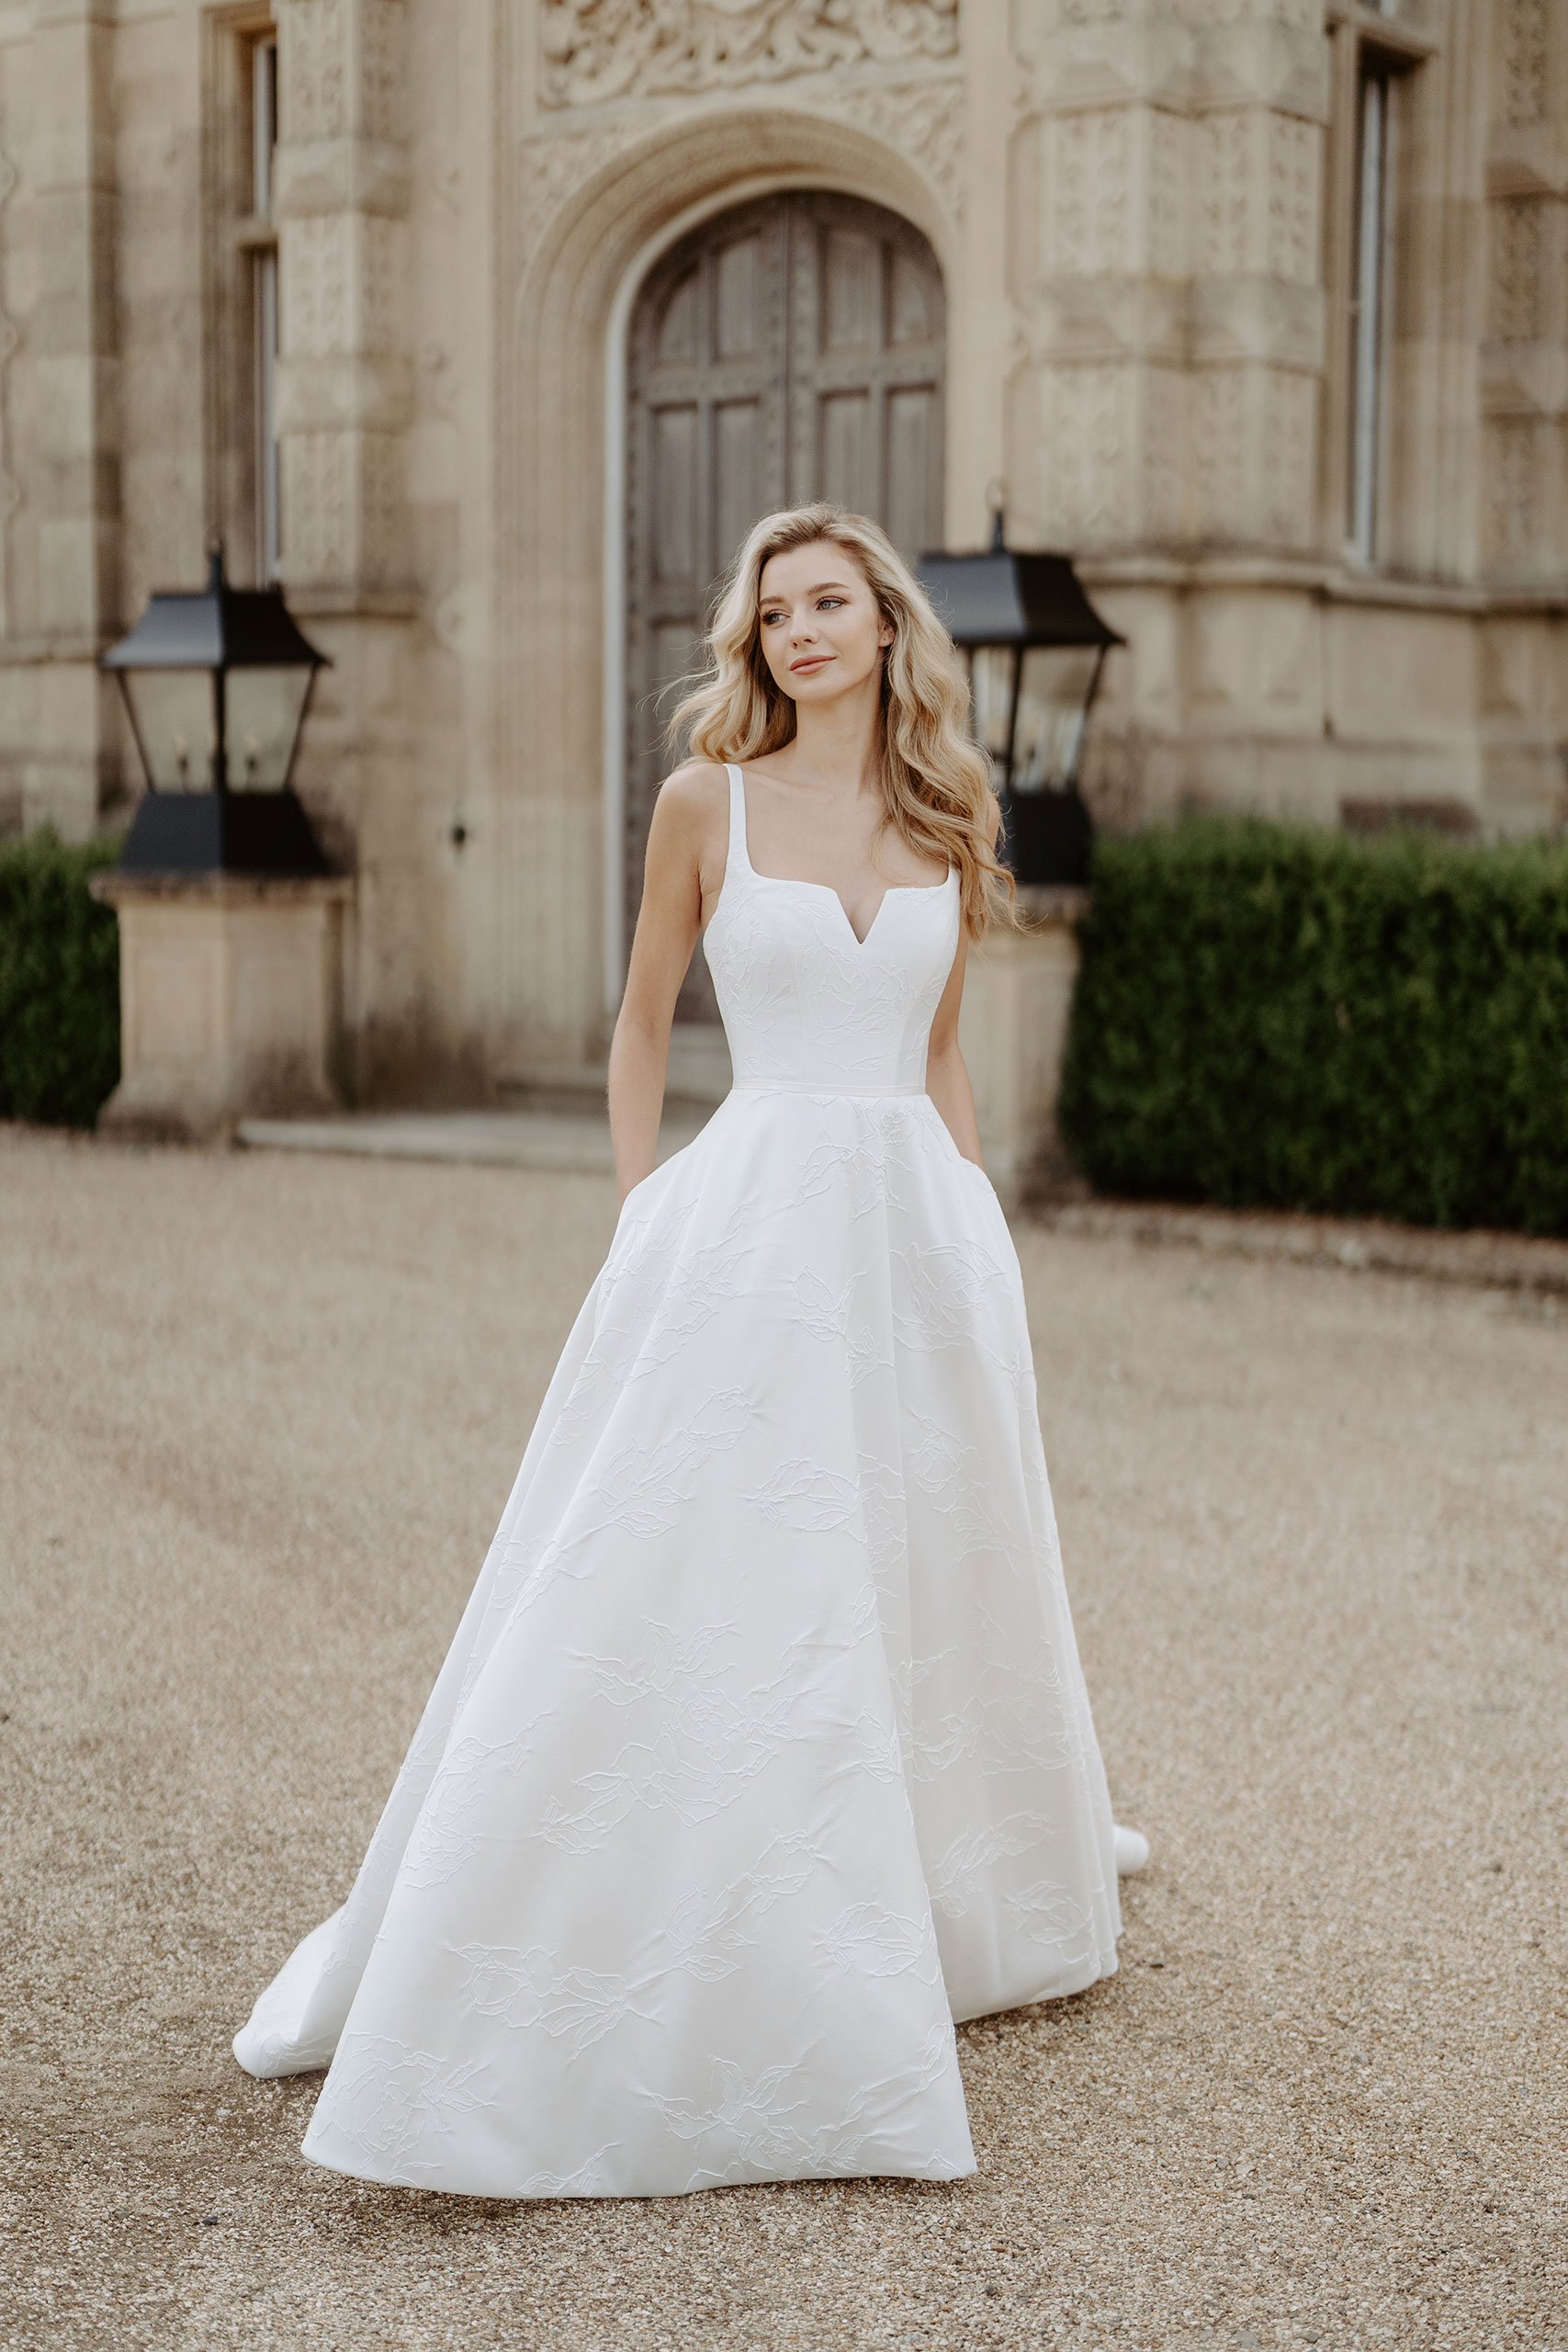 12 Irish Bridal Designers to Consider for Your Dream Wedding Dress |  weddingsonline